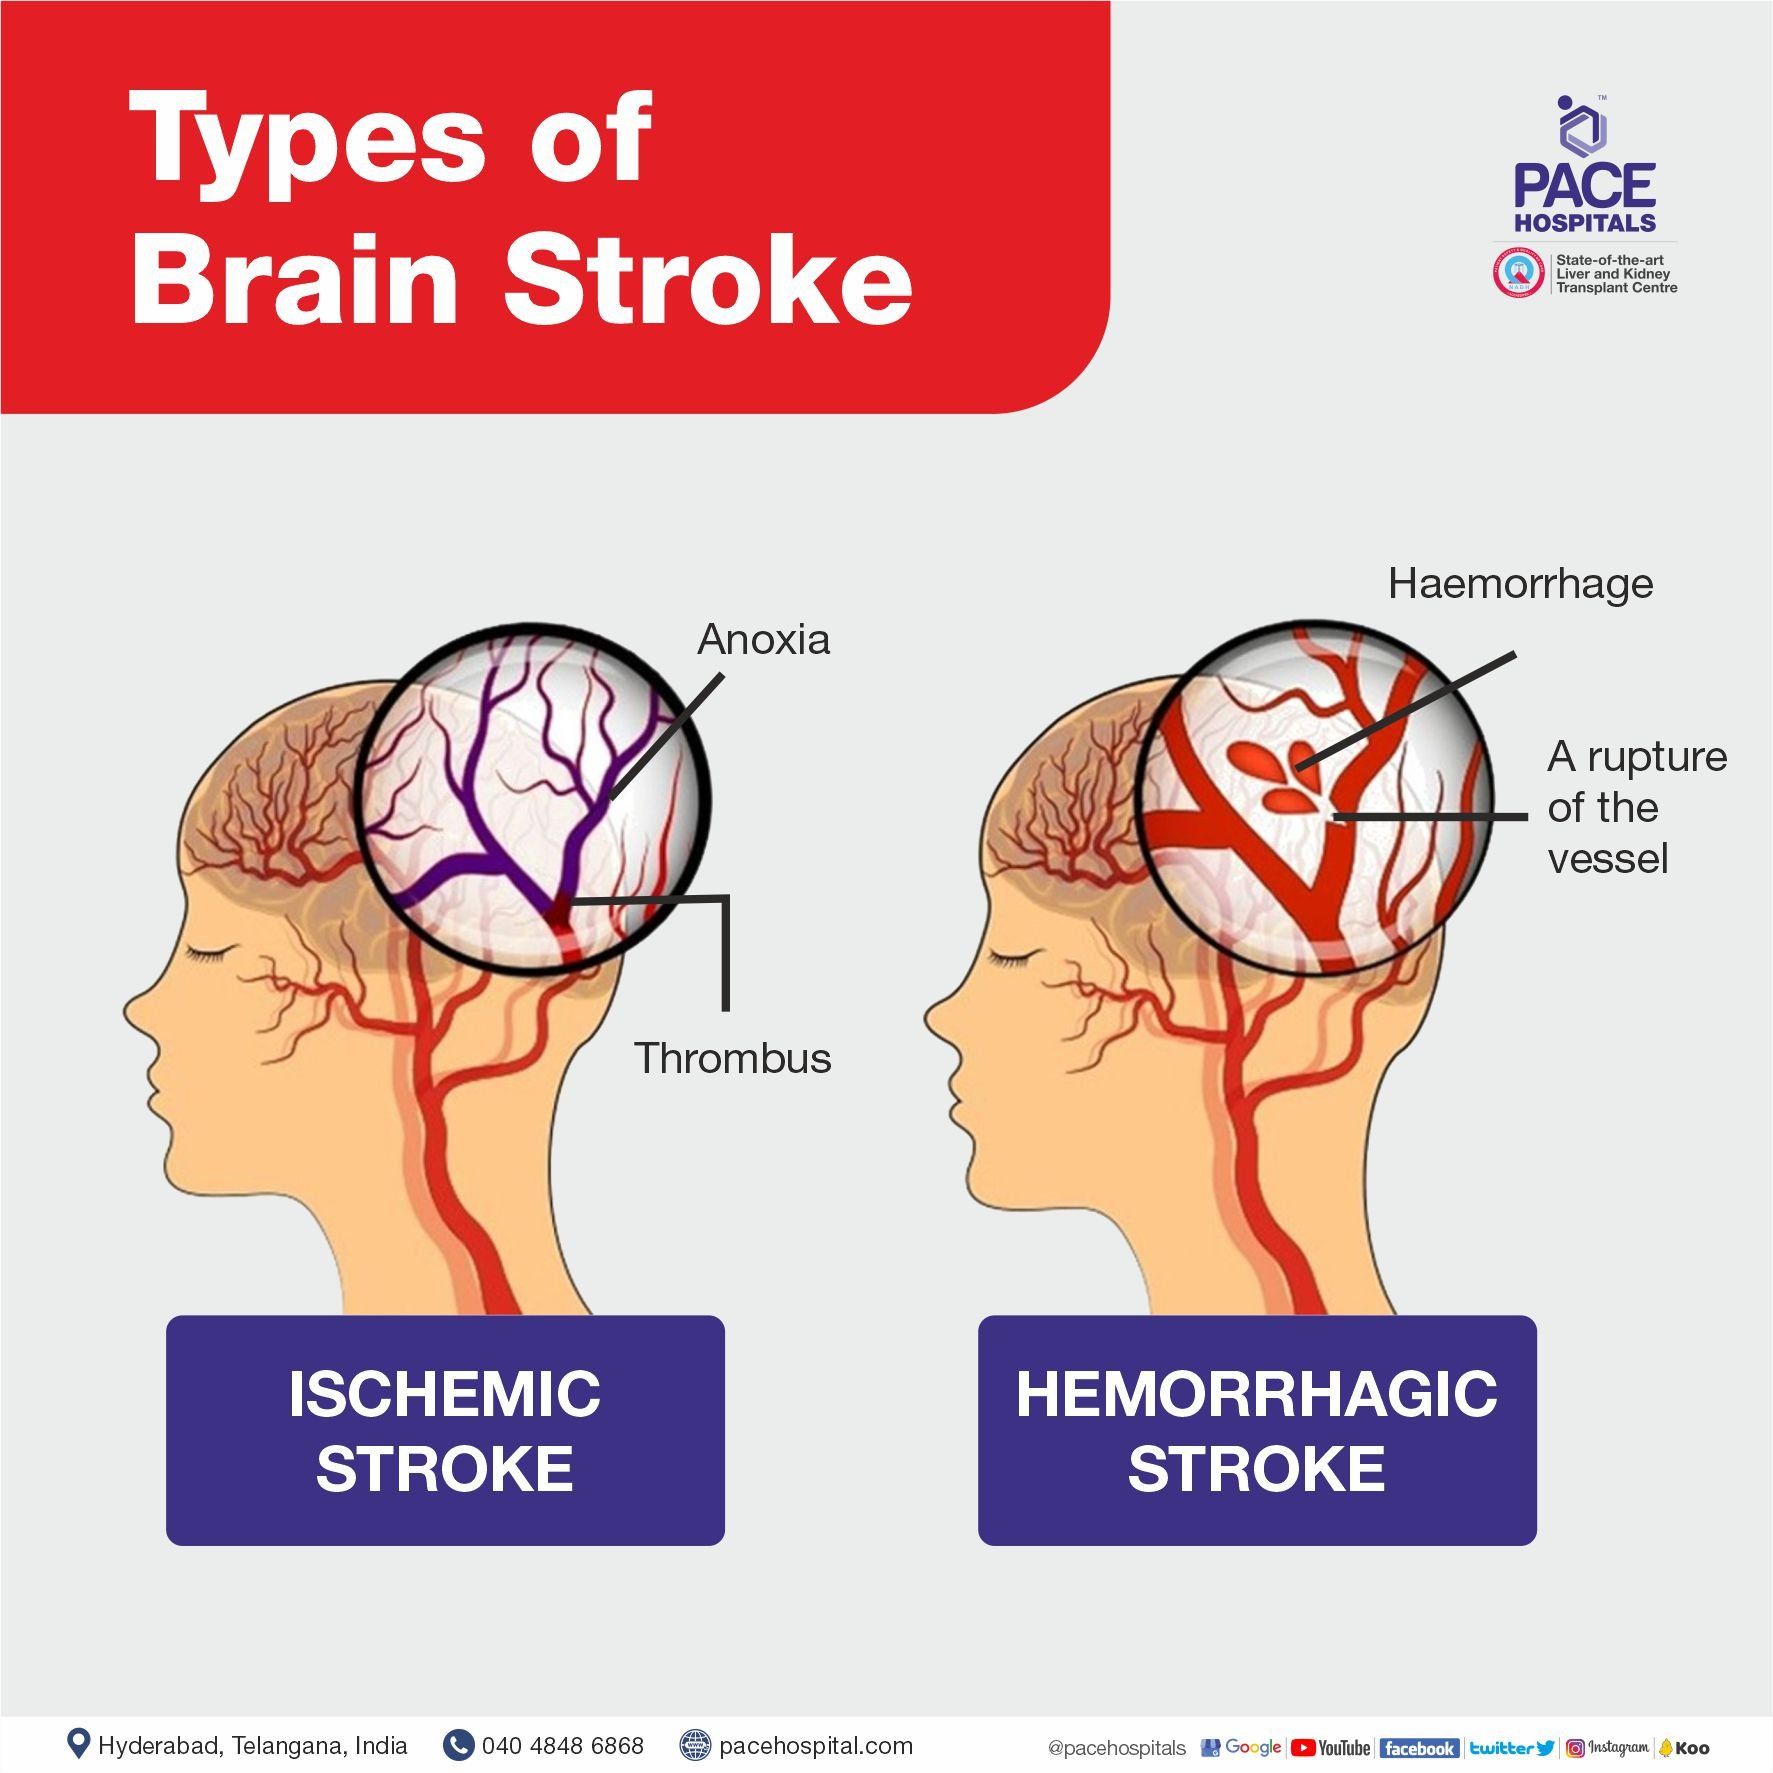 Types of Brain Stroke - Ischemic stroke and Haemorrhagic stroke